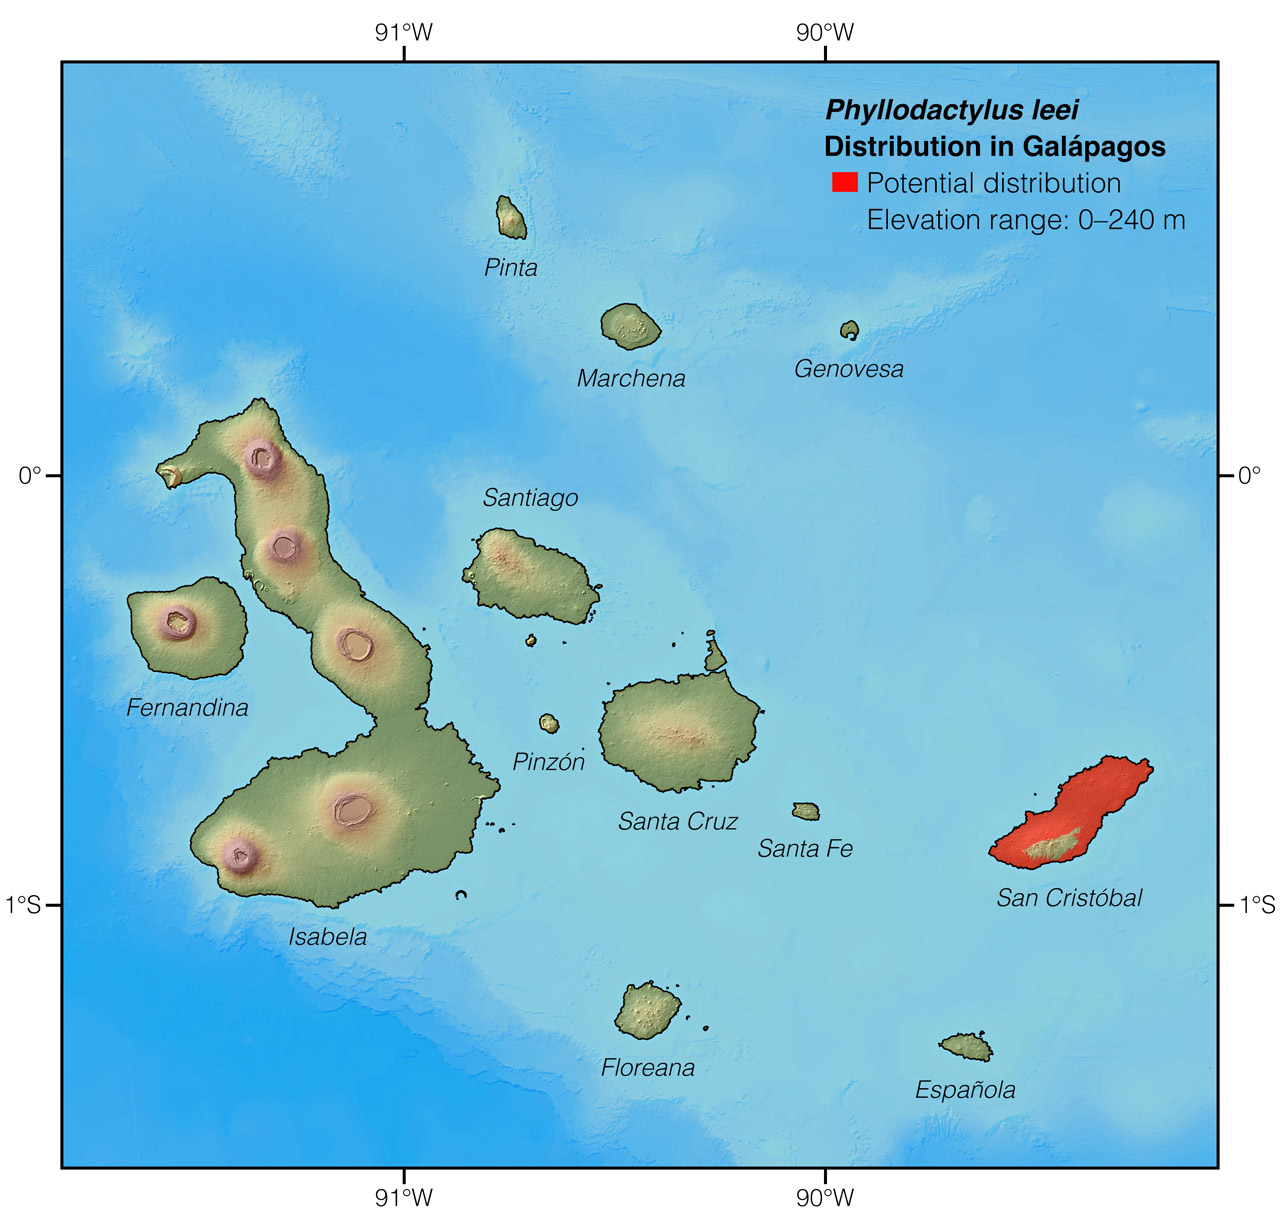 Distribution of Phyllodactylus leei in Galápagos